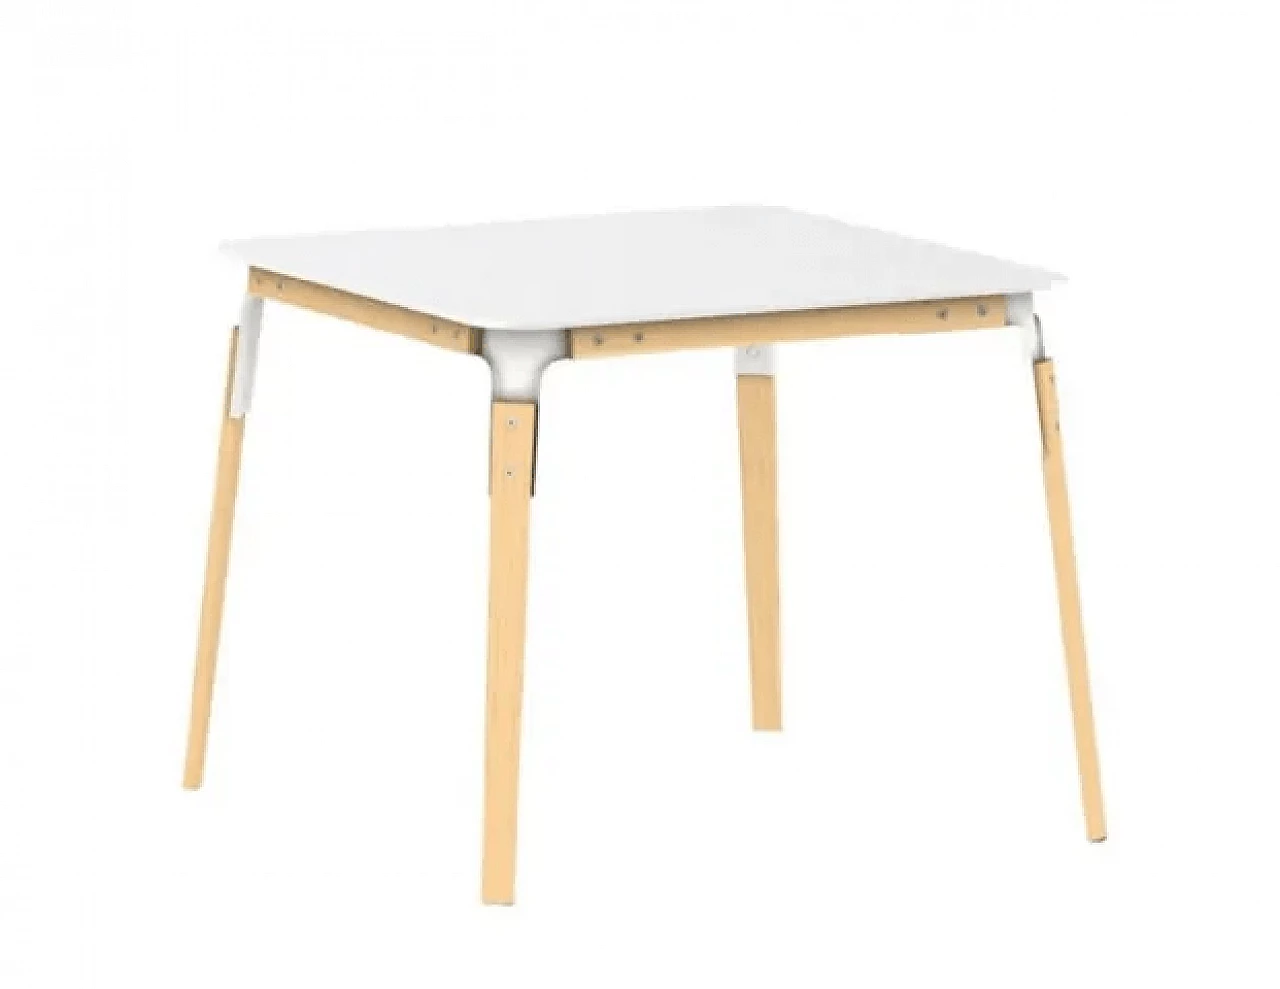 Steelwood table by Ronan & Erwan Bouroullec for Magis 1